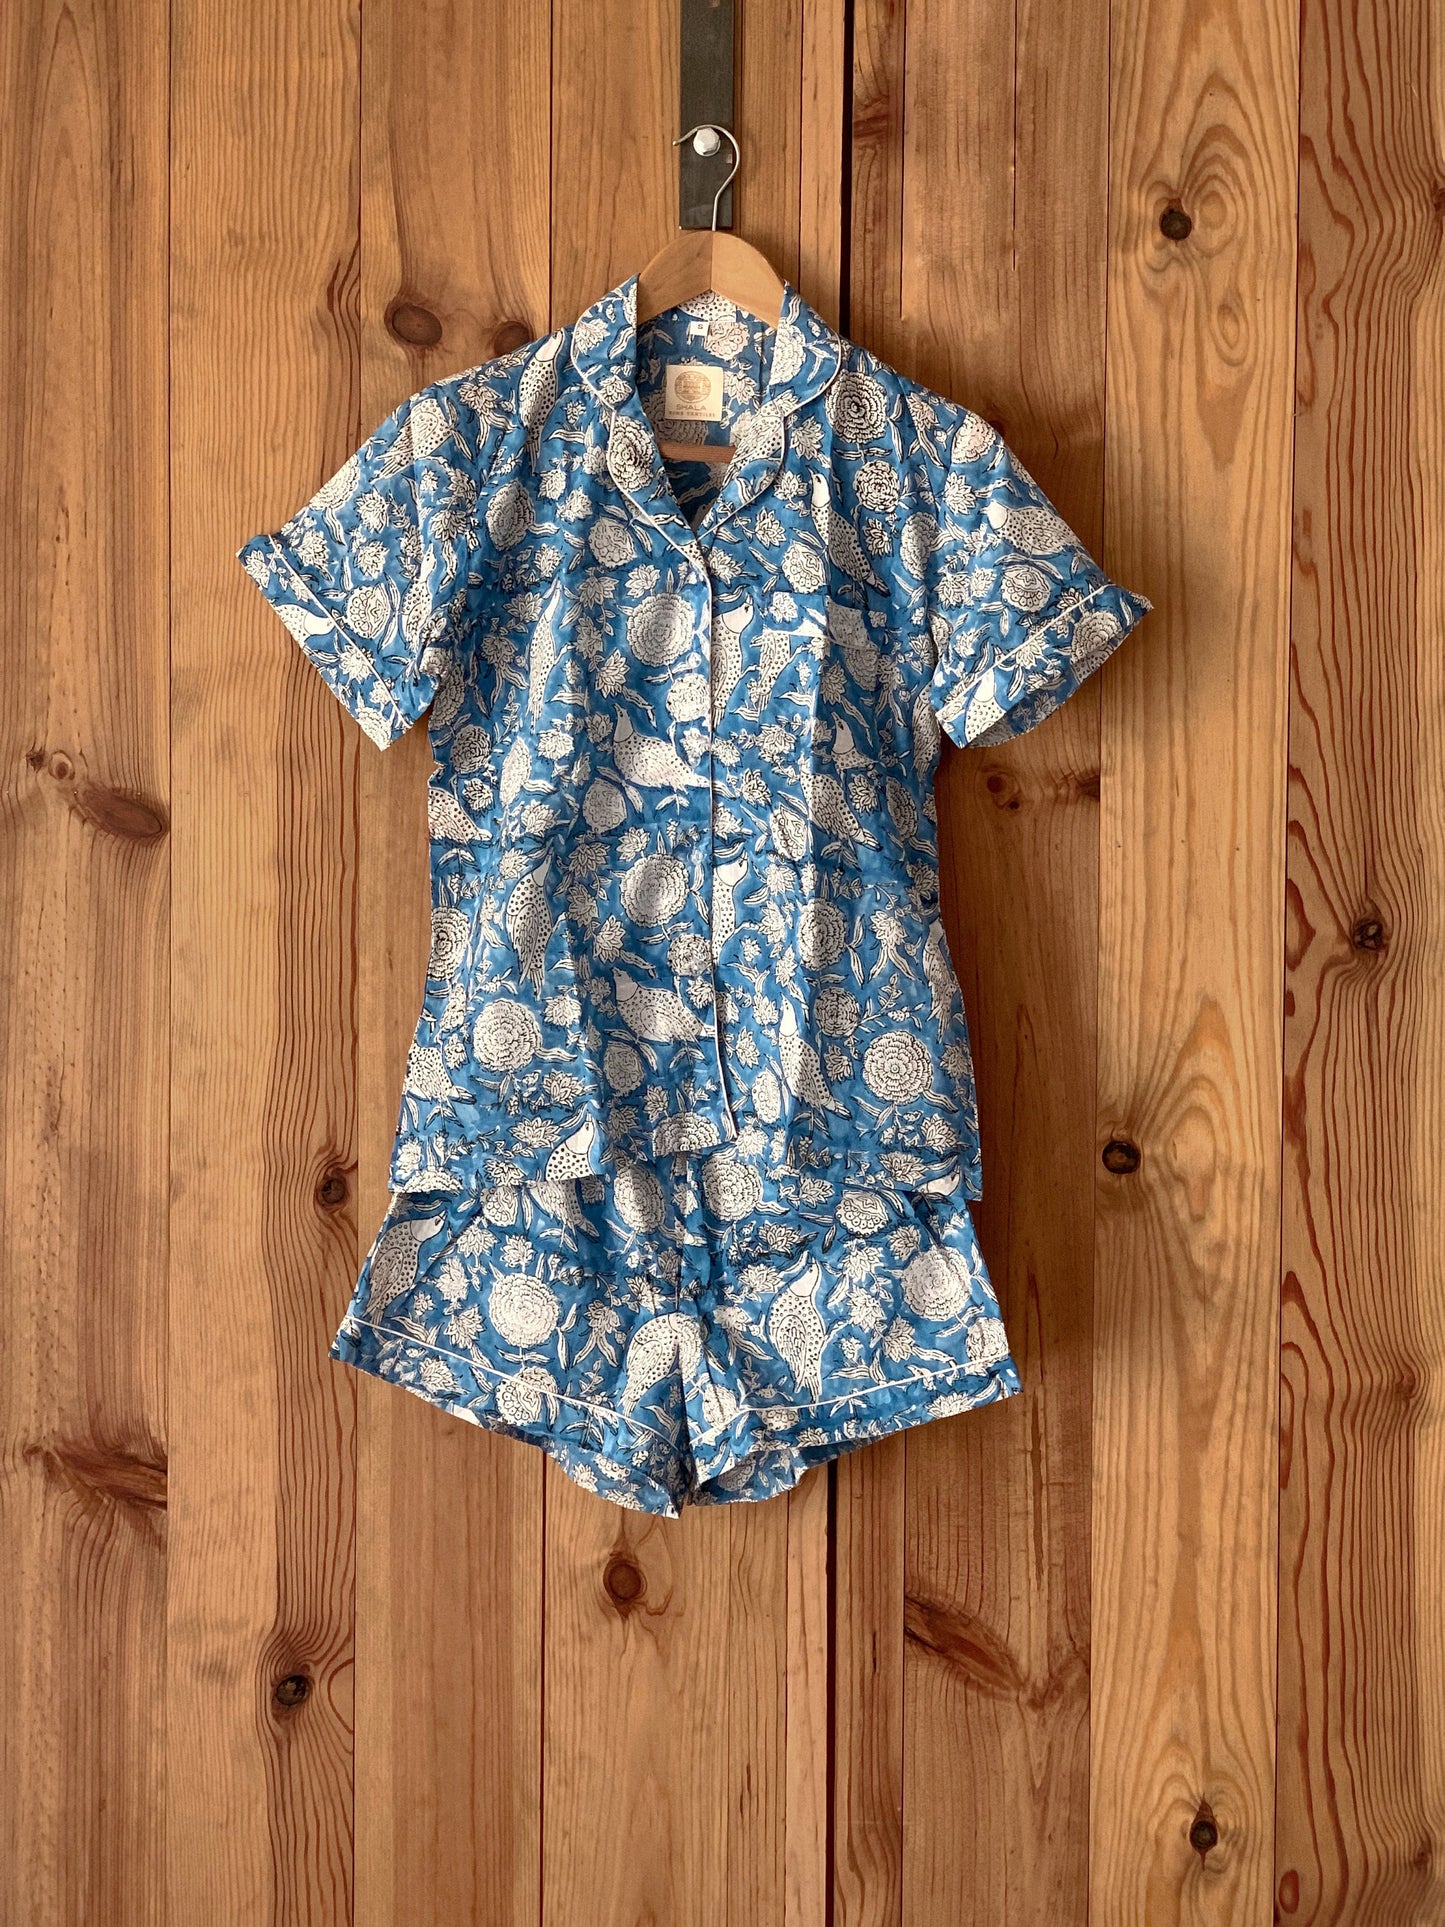 SET regalo · Pijama manga/pantalón corto & bata kimono a juego · Algodón puro estampado block print artesanal en India · Azul flores